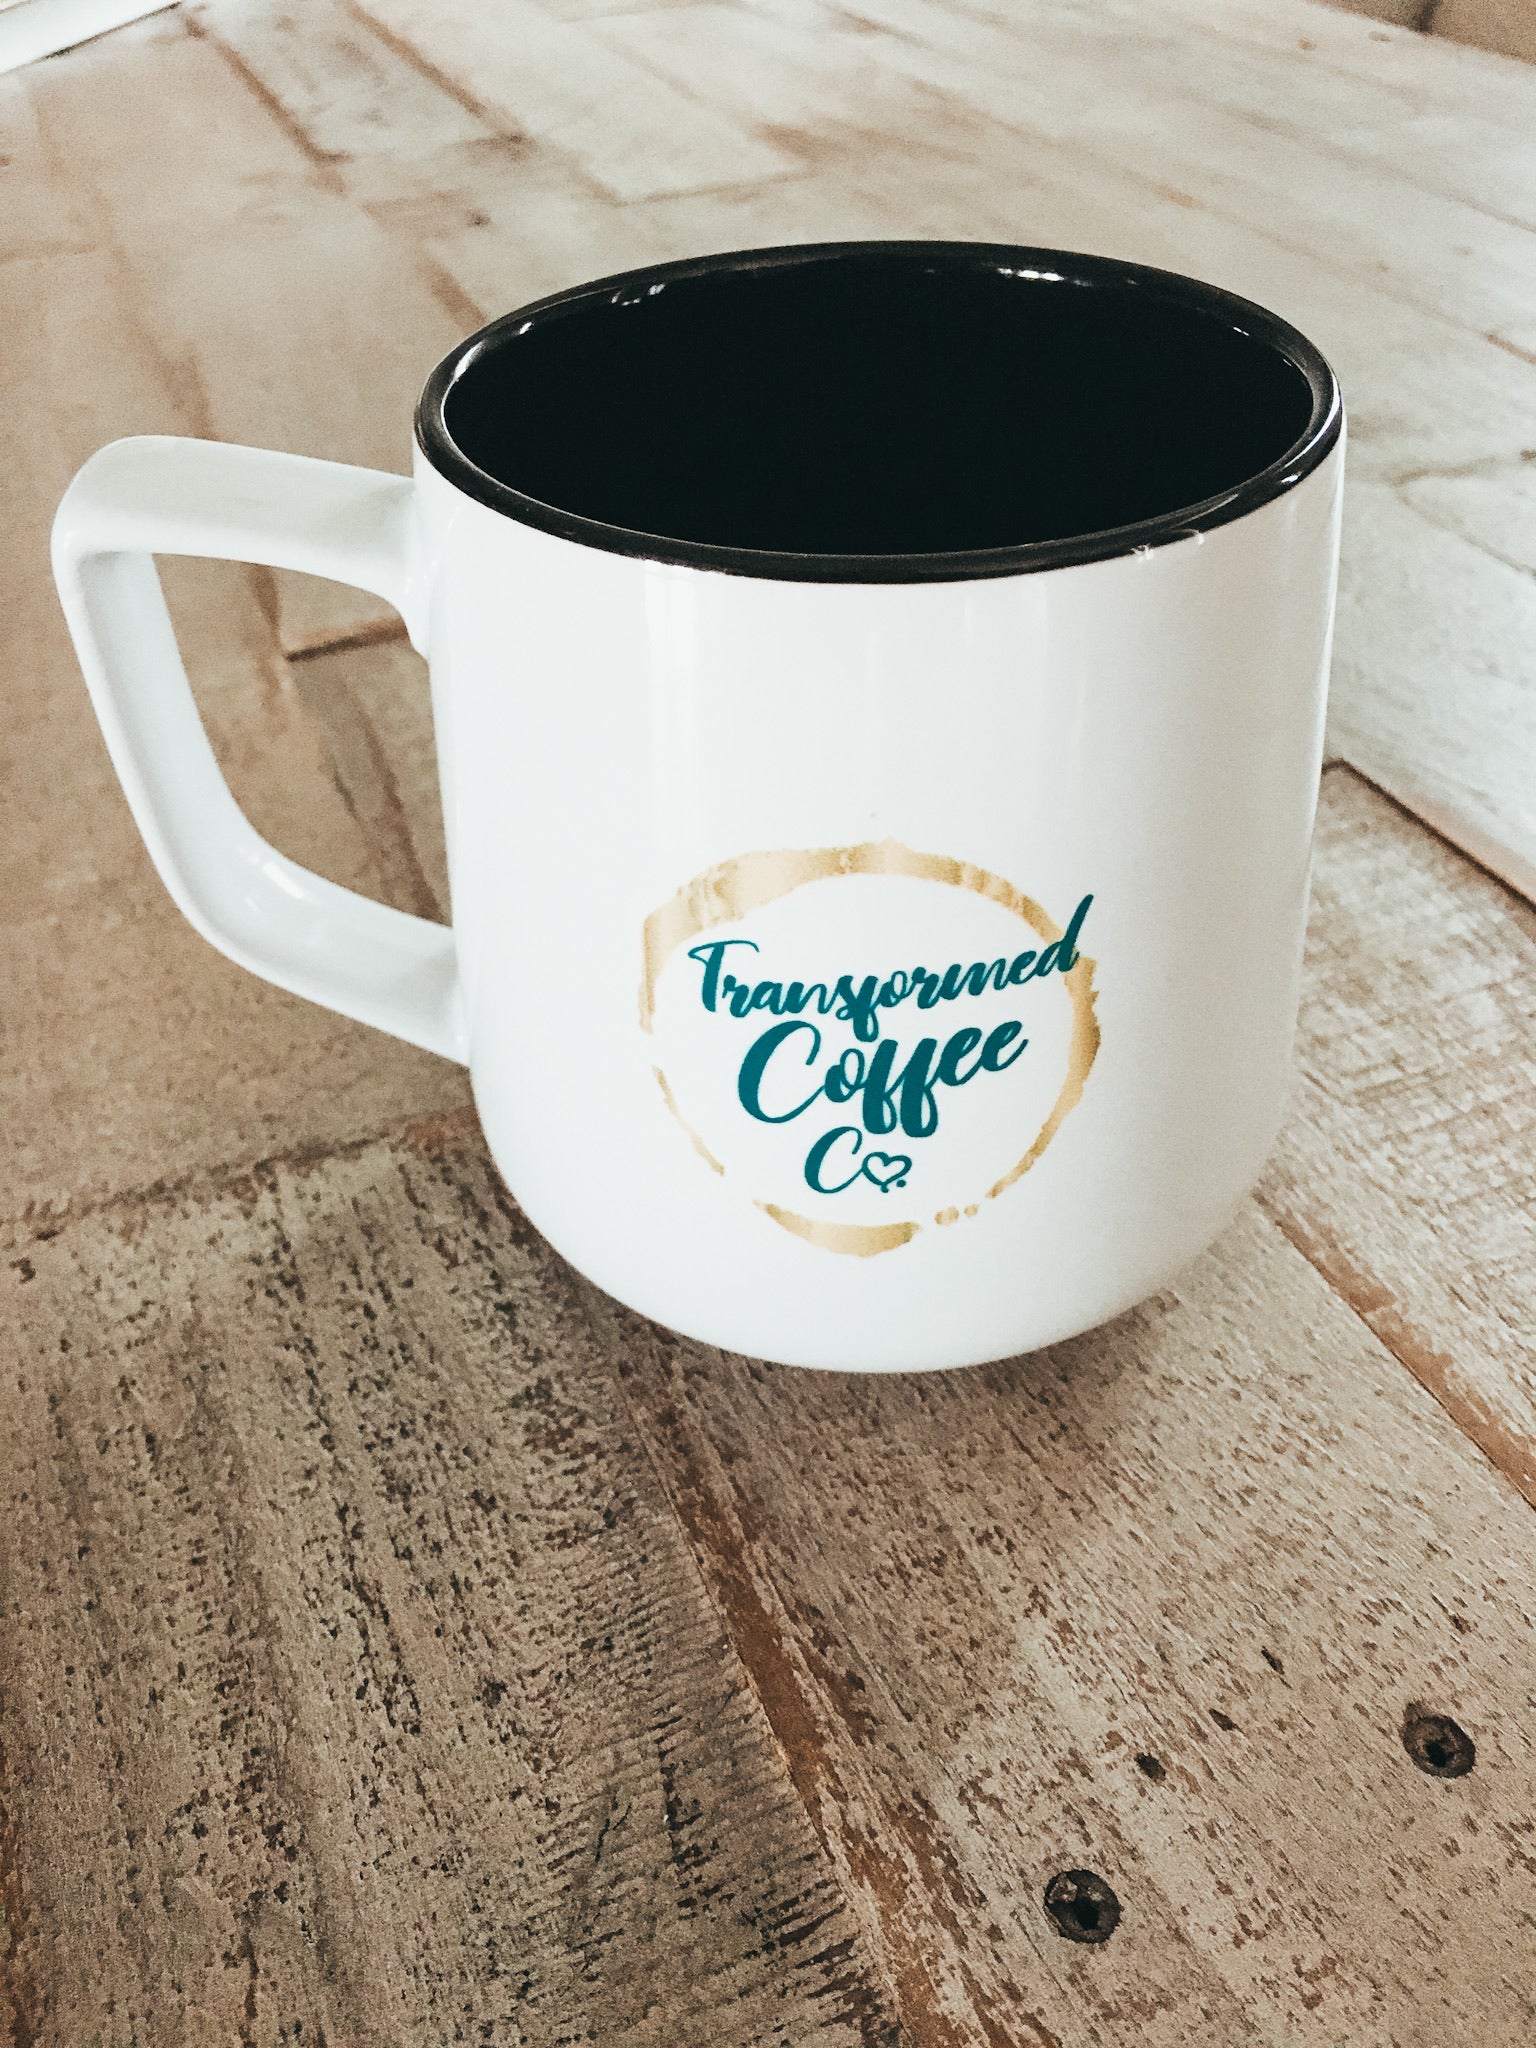 Transformed Coffee Co. - Mug